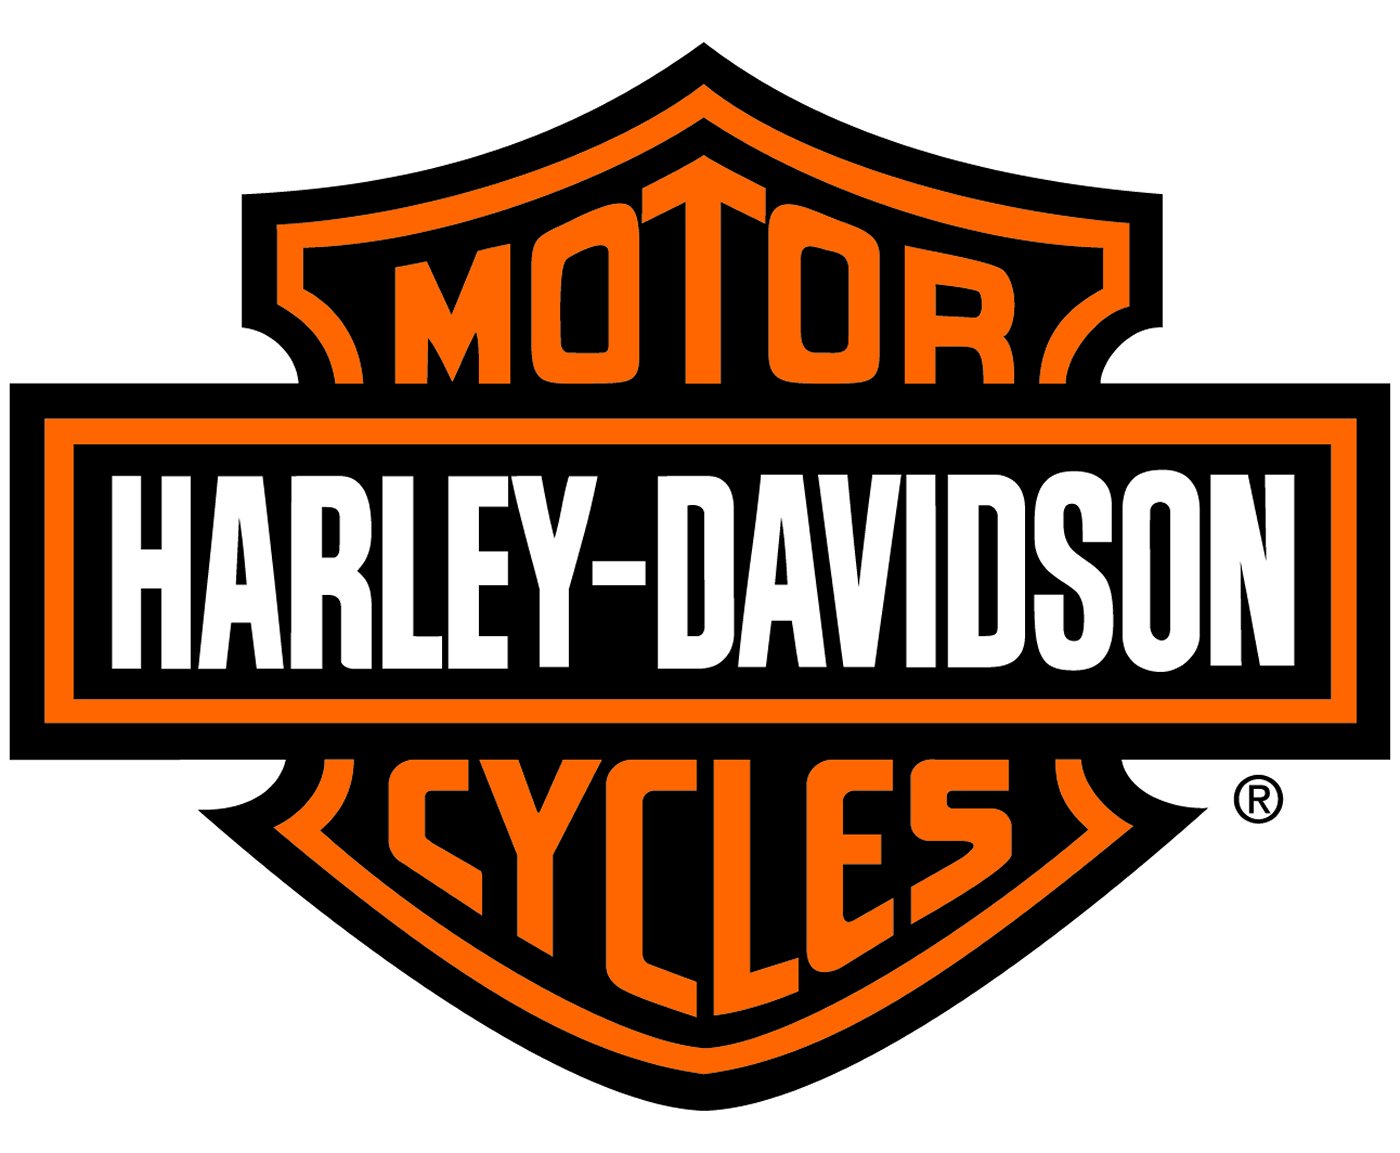 Harley davidson logo Wallpaper